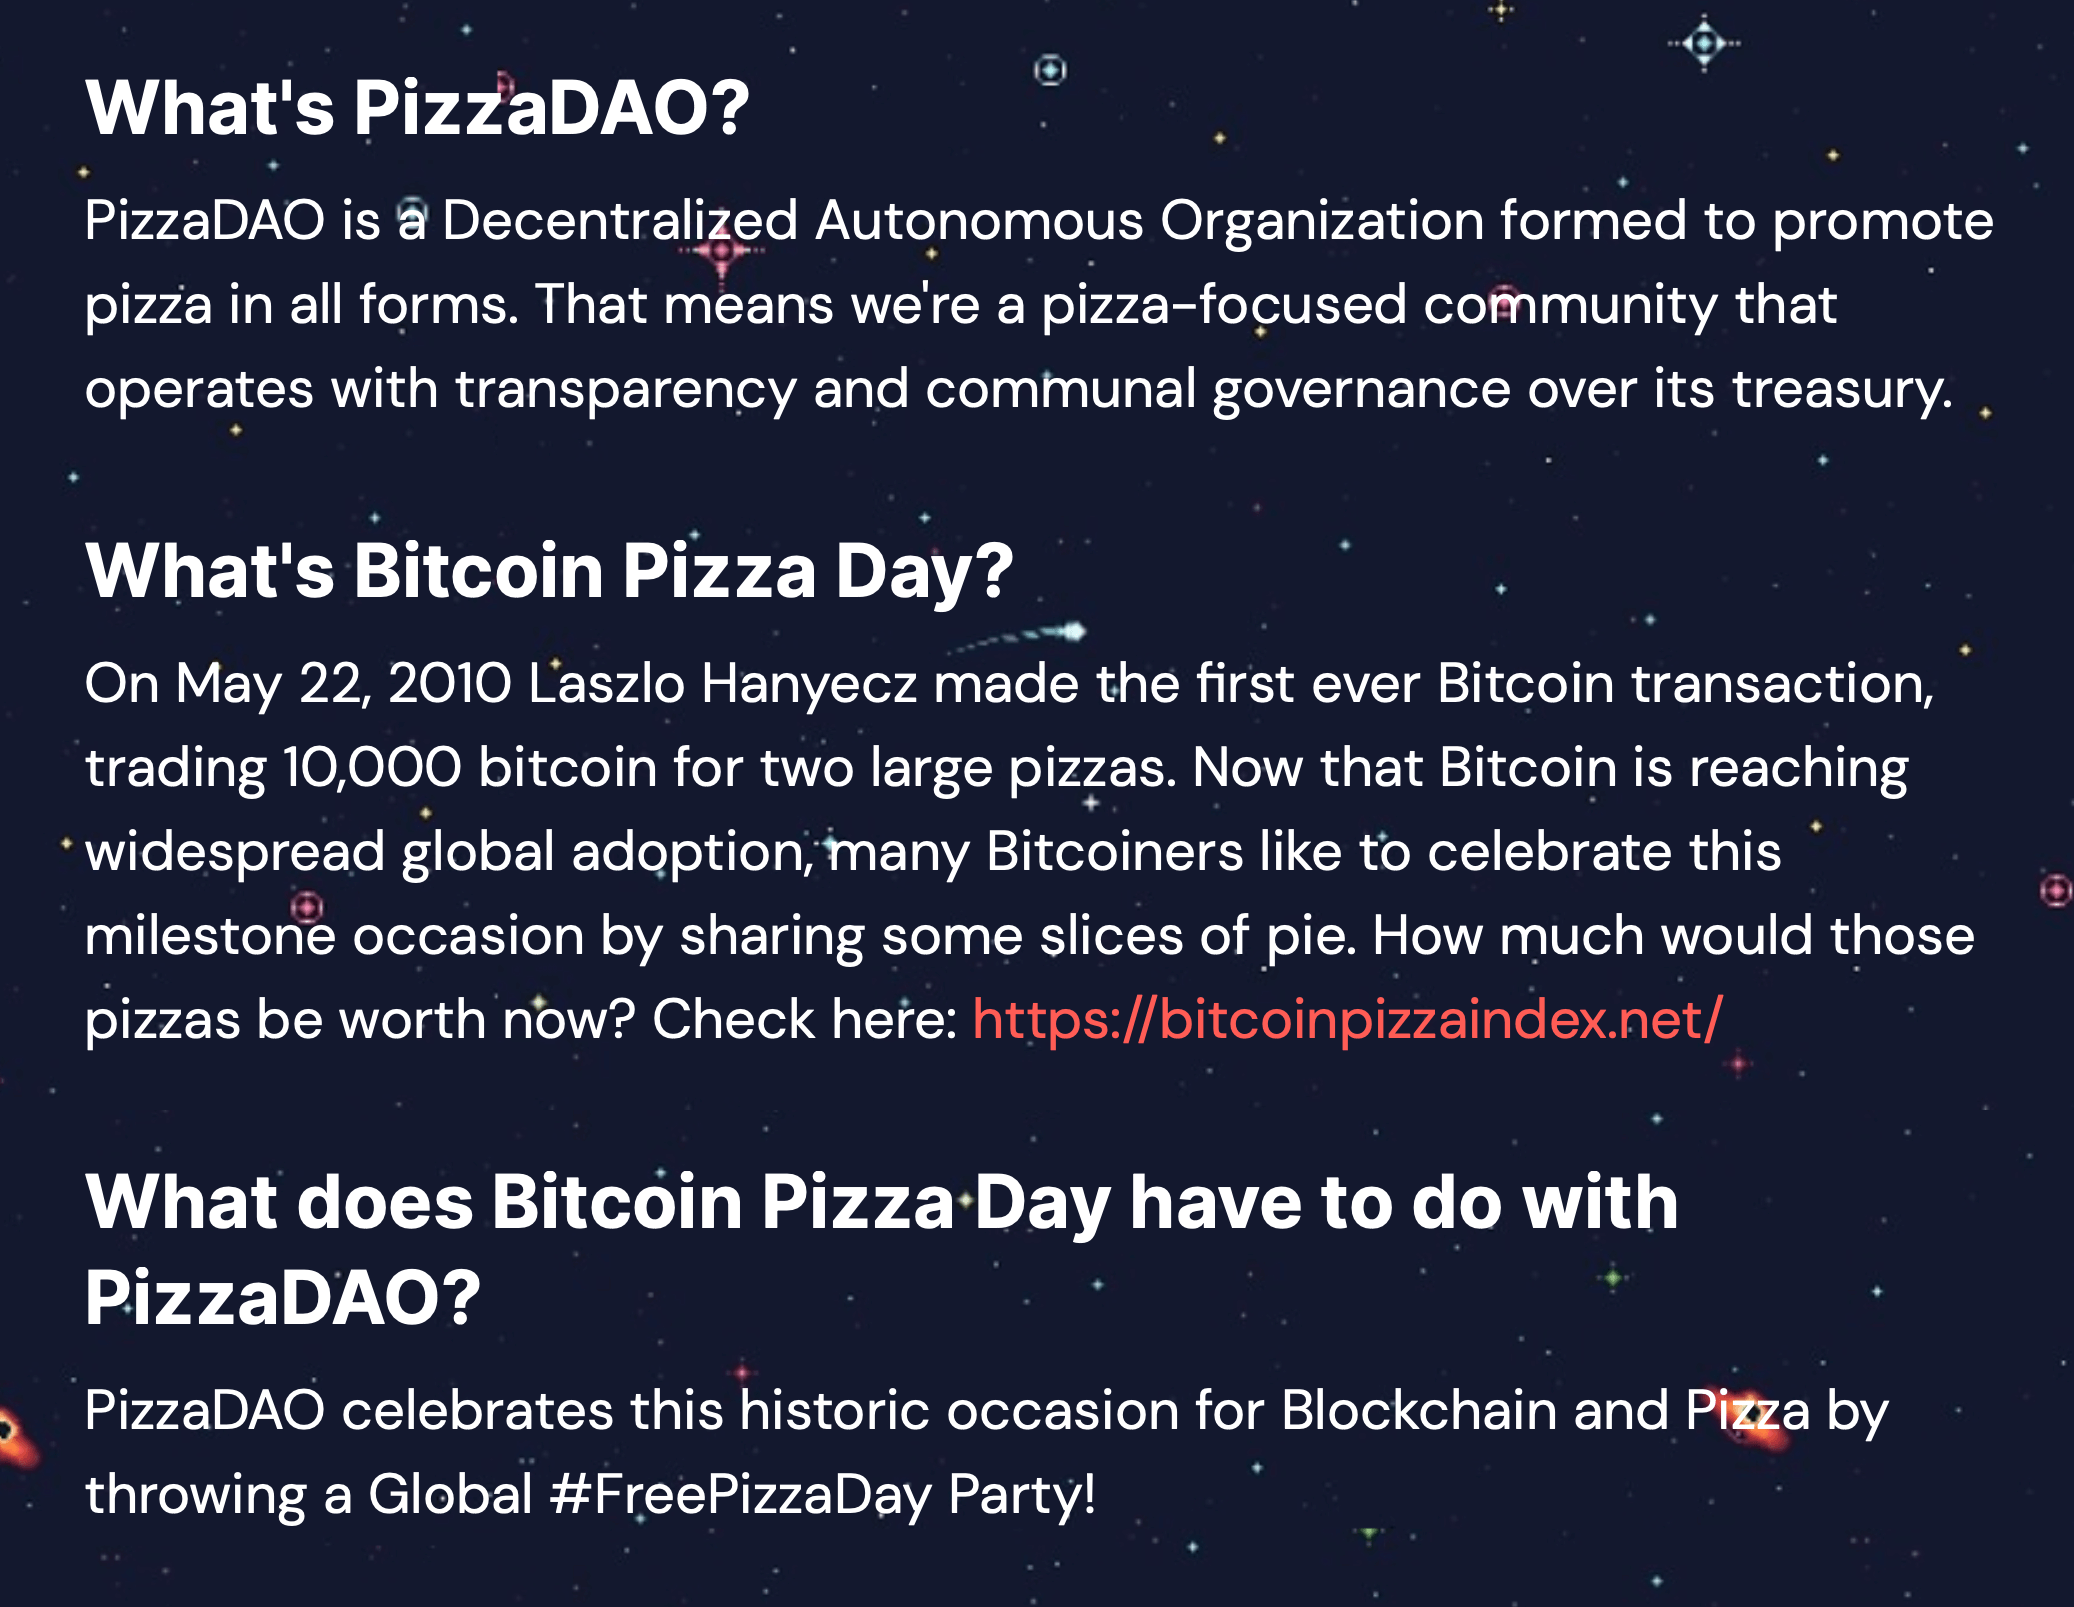 pizzadao mission statement